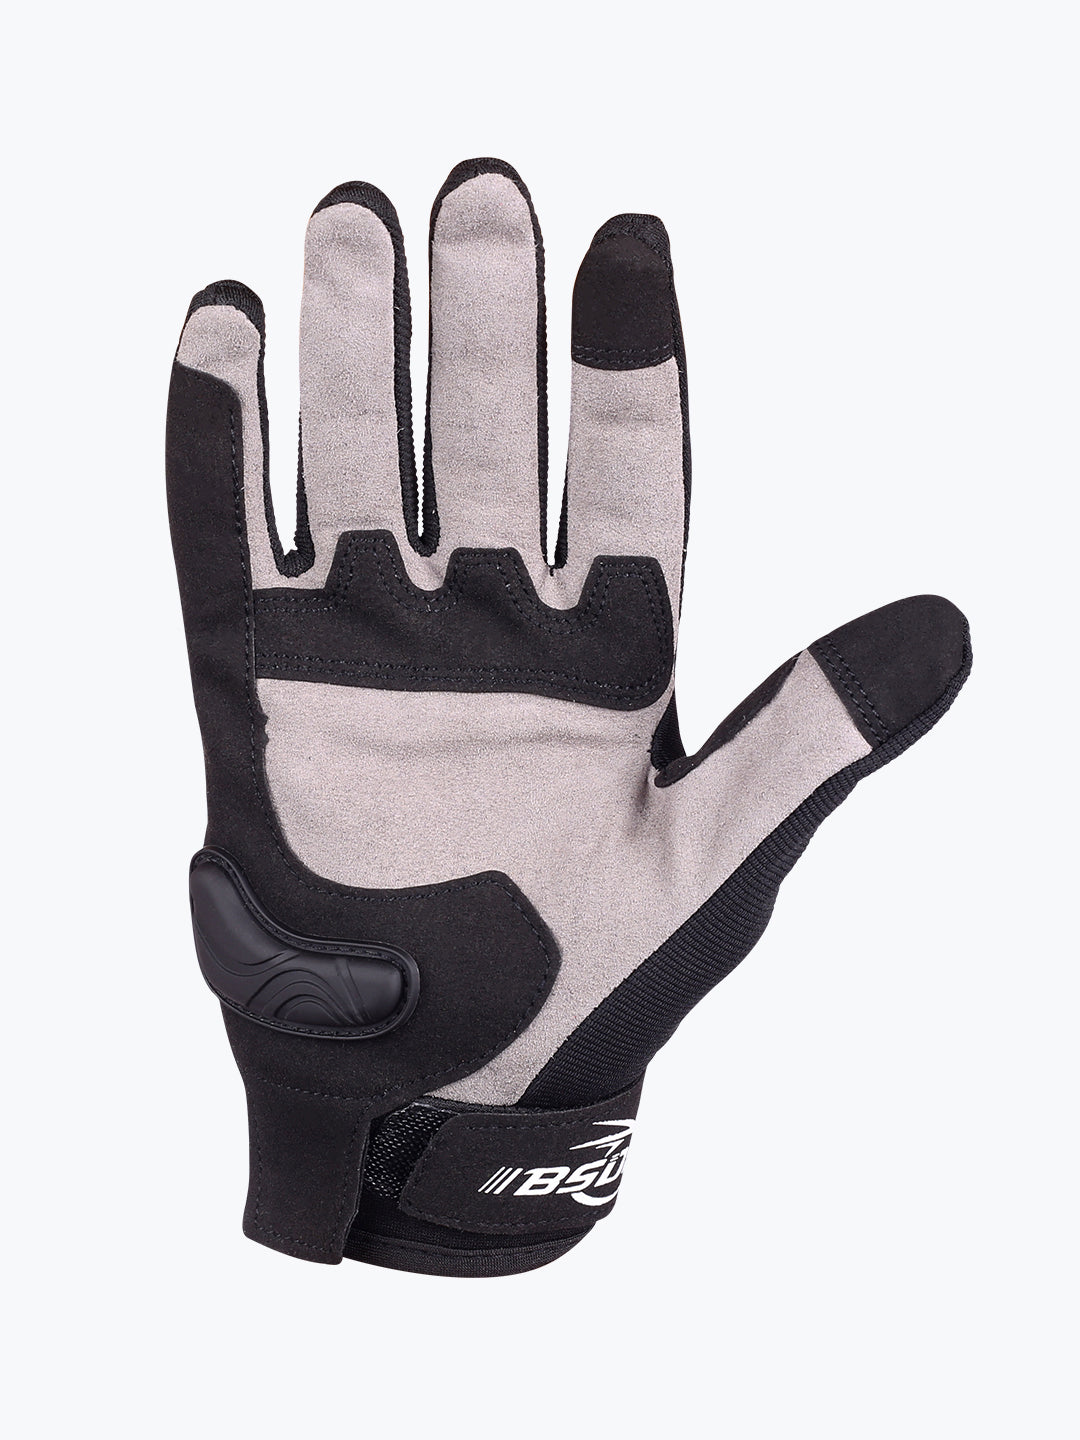 BSDDP Gloves A0143 Black